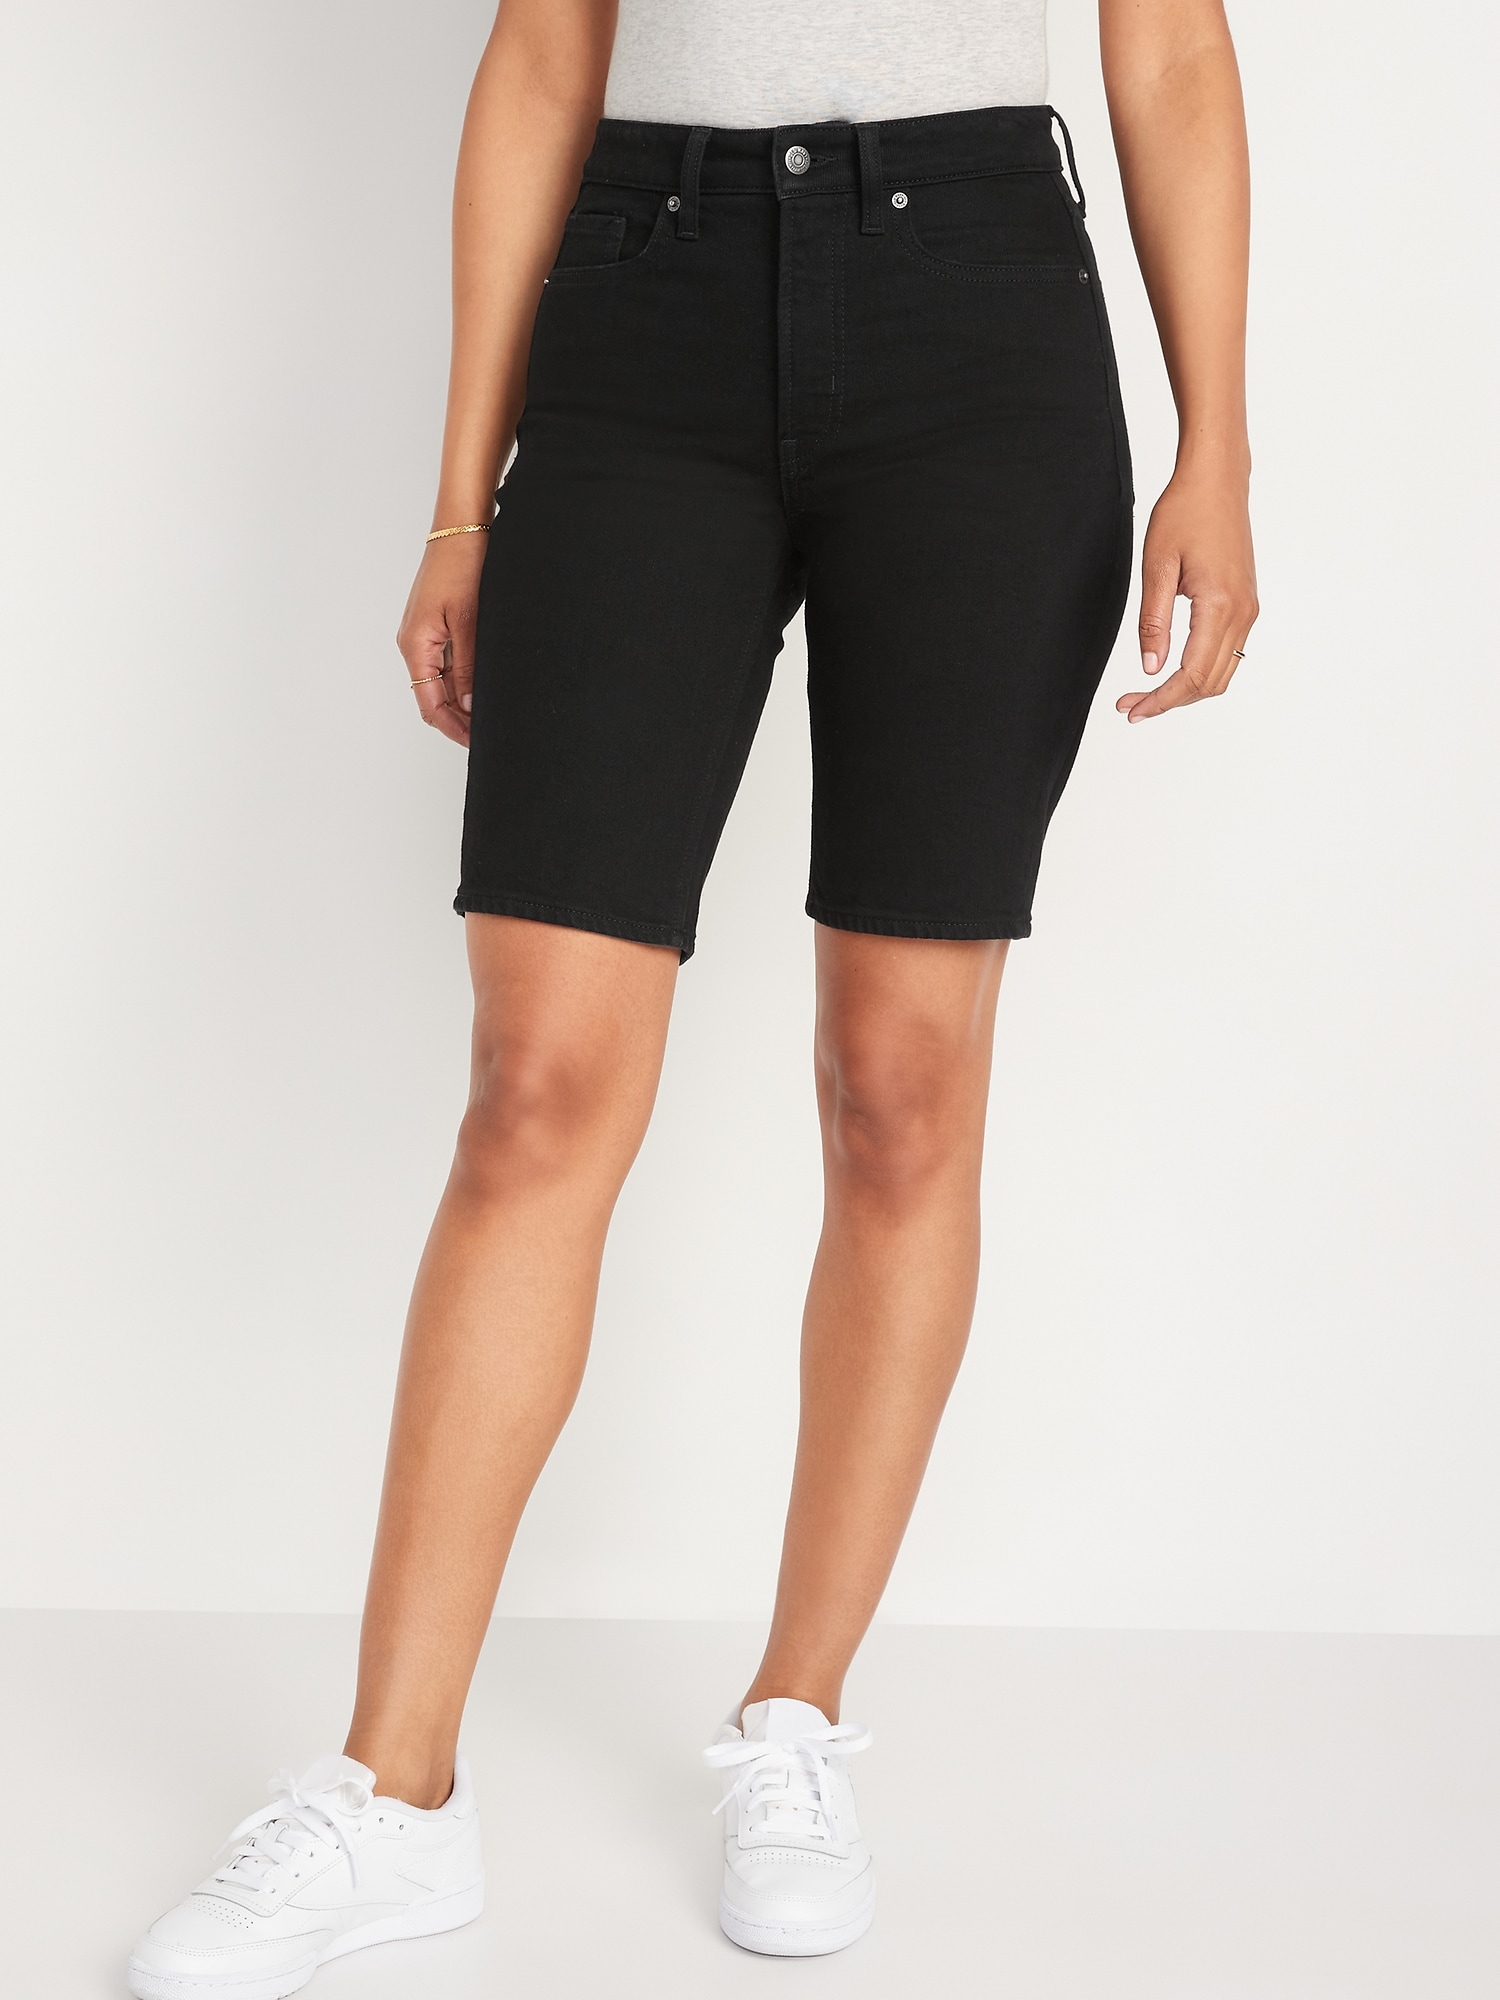 Women's Black Shorts - Jean, Biker, Soft & High Waisted Shorts